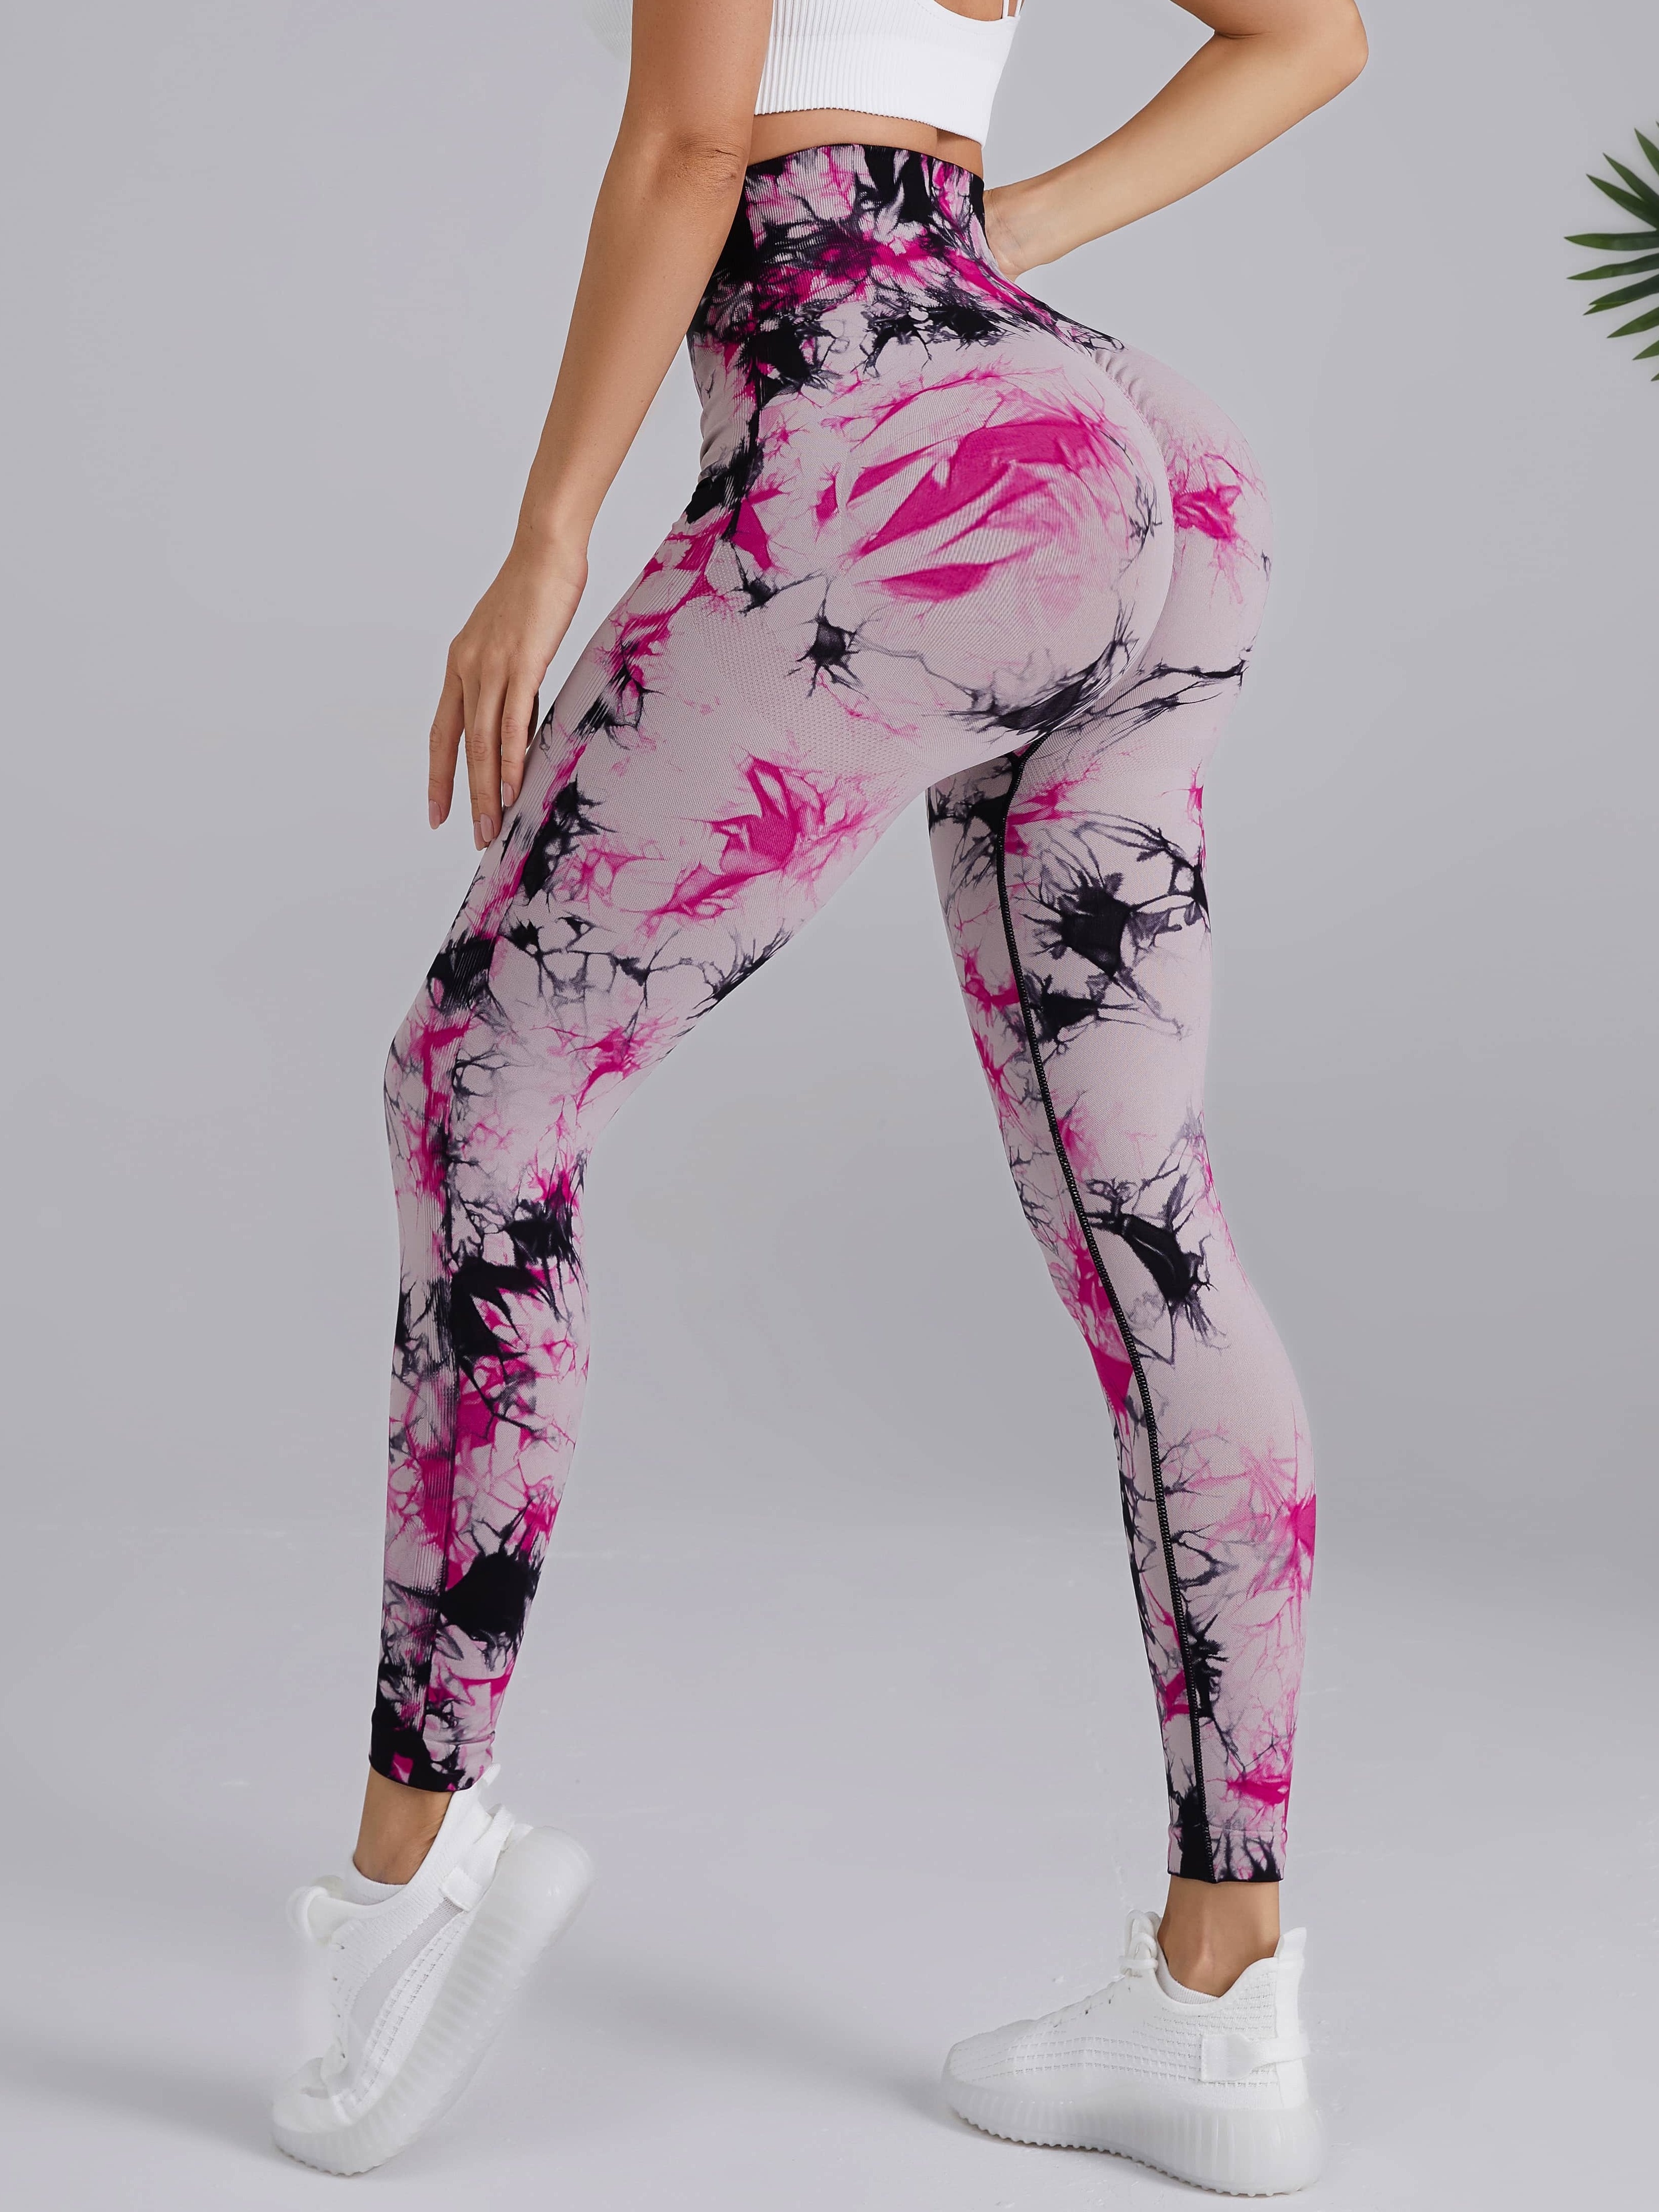 Floral Yoga Pants Booty Push up Pink Printed Leggings Flowers